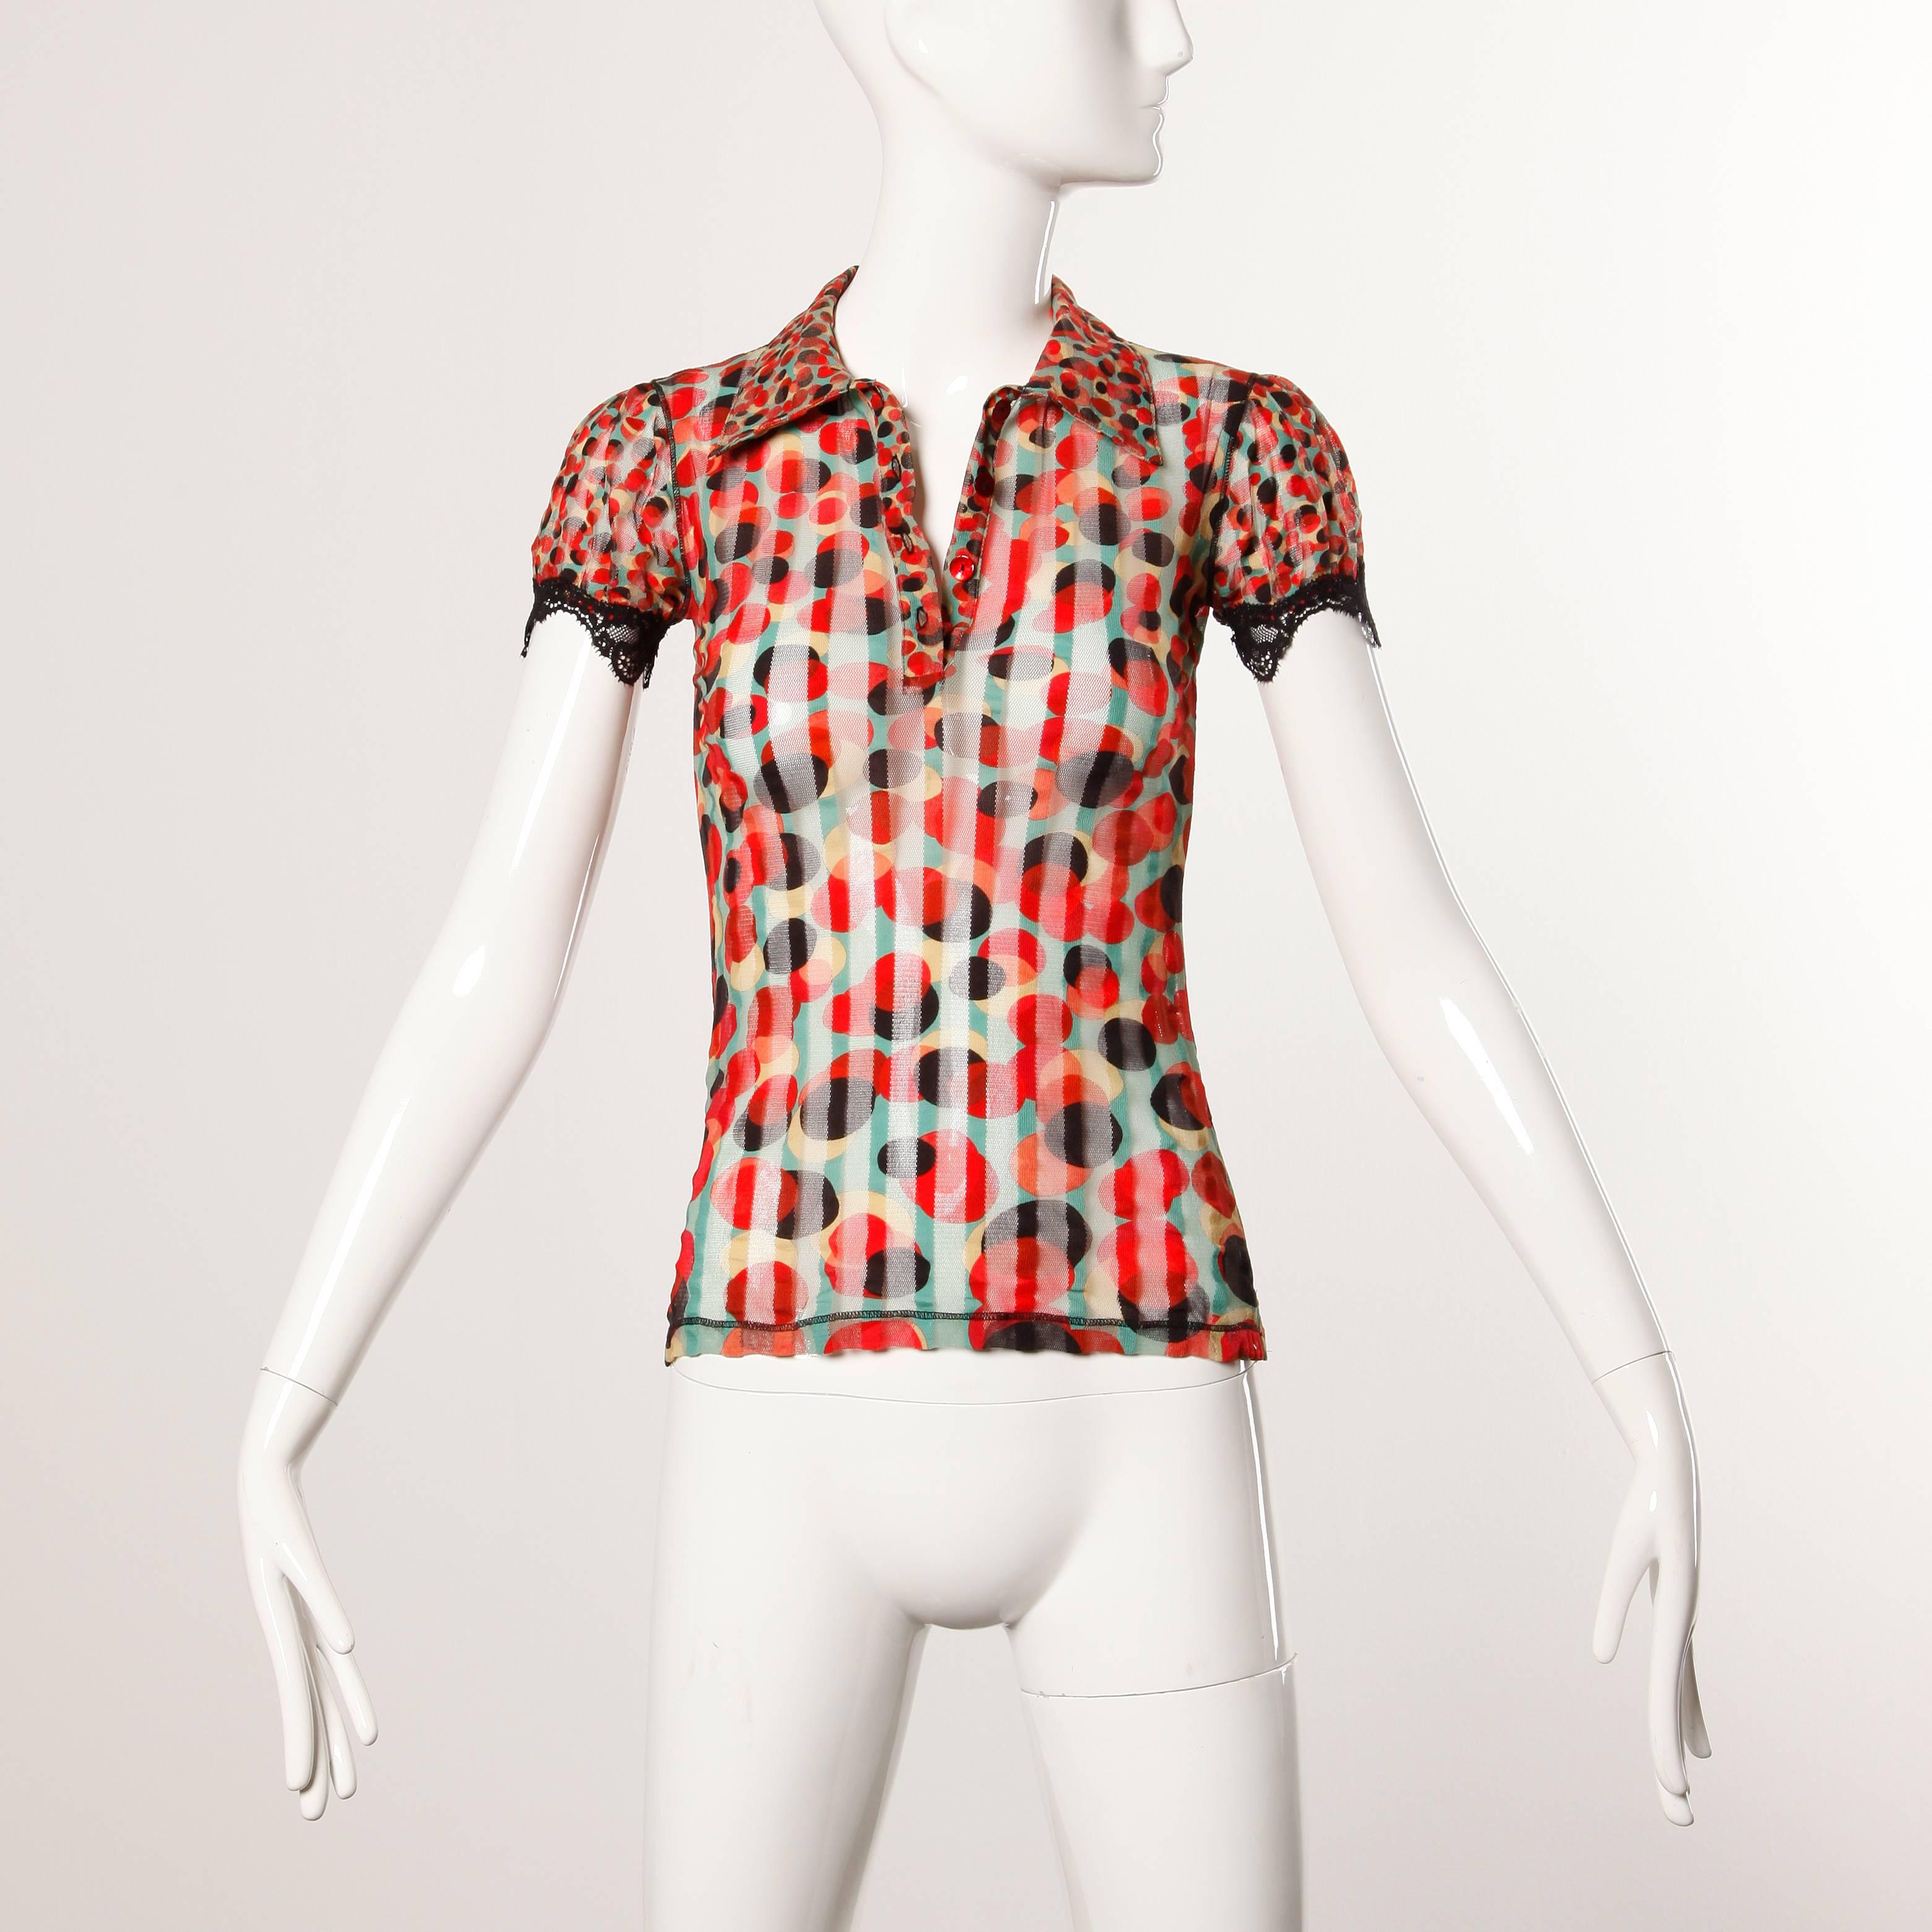 Women's Jean Paul Gaultier Vintage Sheer Mesh Op Art Polka Dot Print Top with Lace Trim